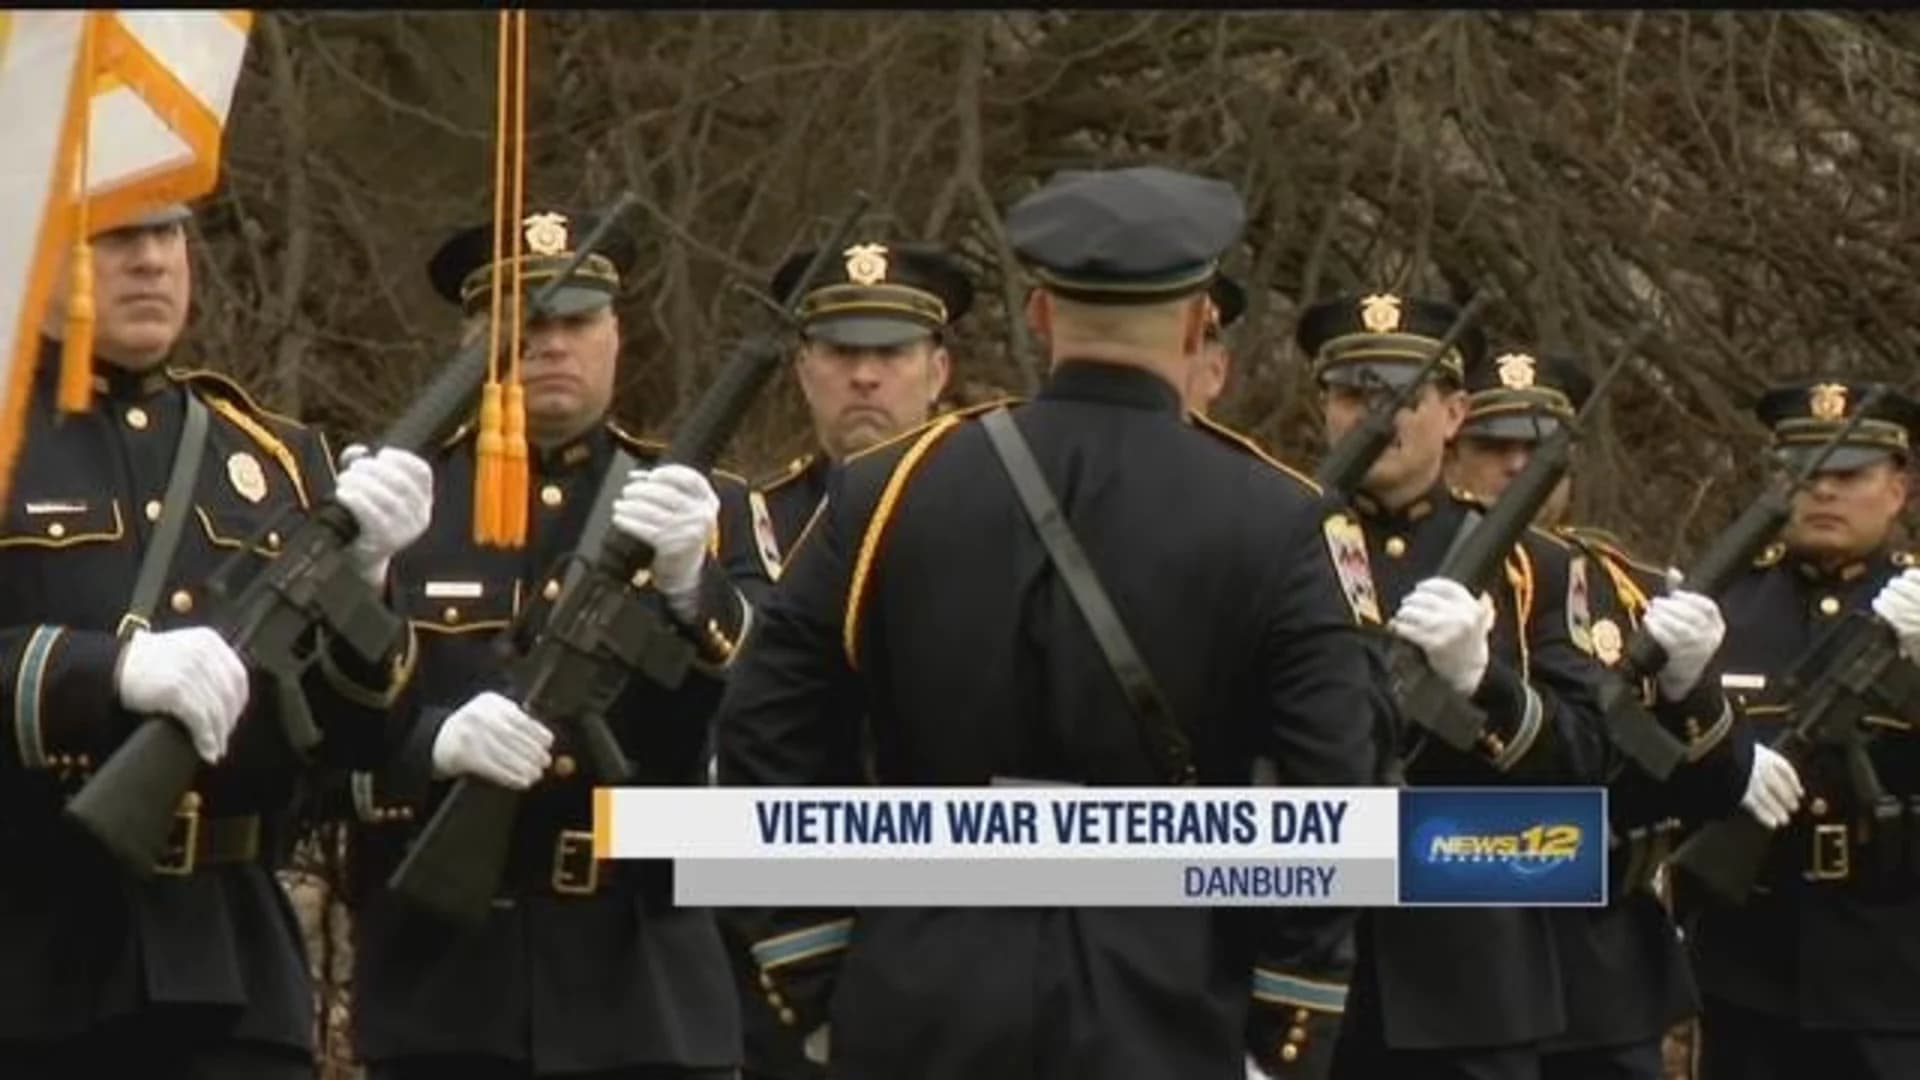 Vietnam vets honored during ceremony in Danbury